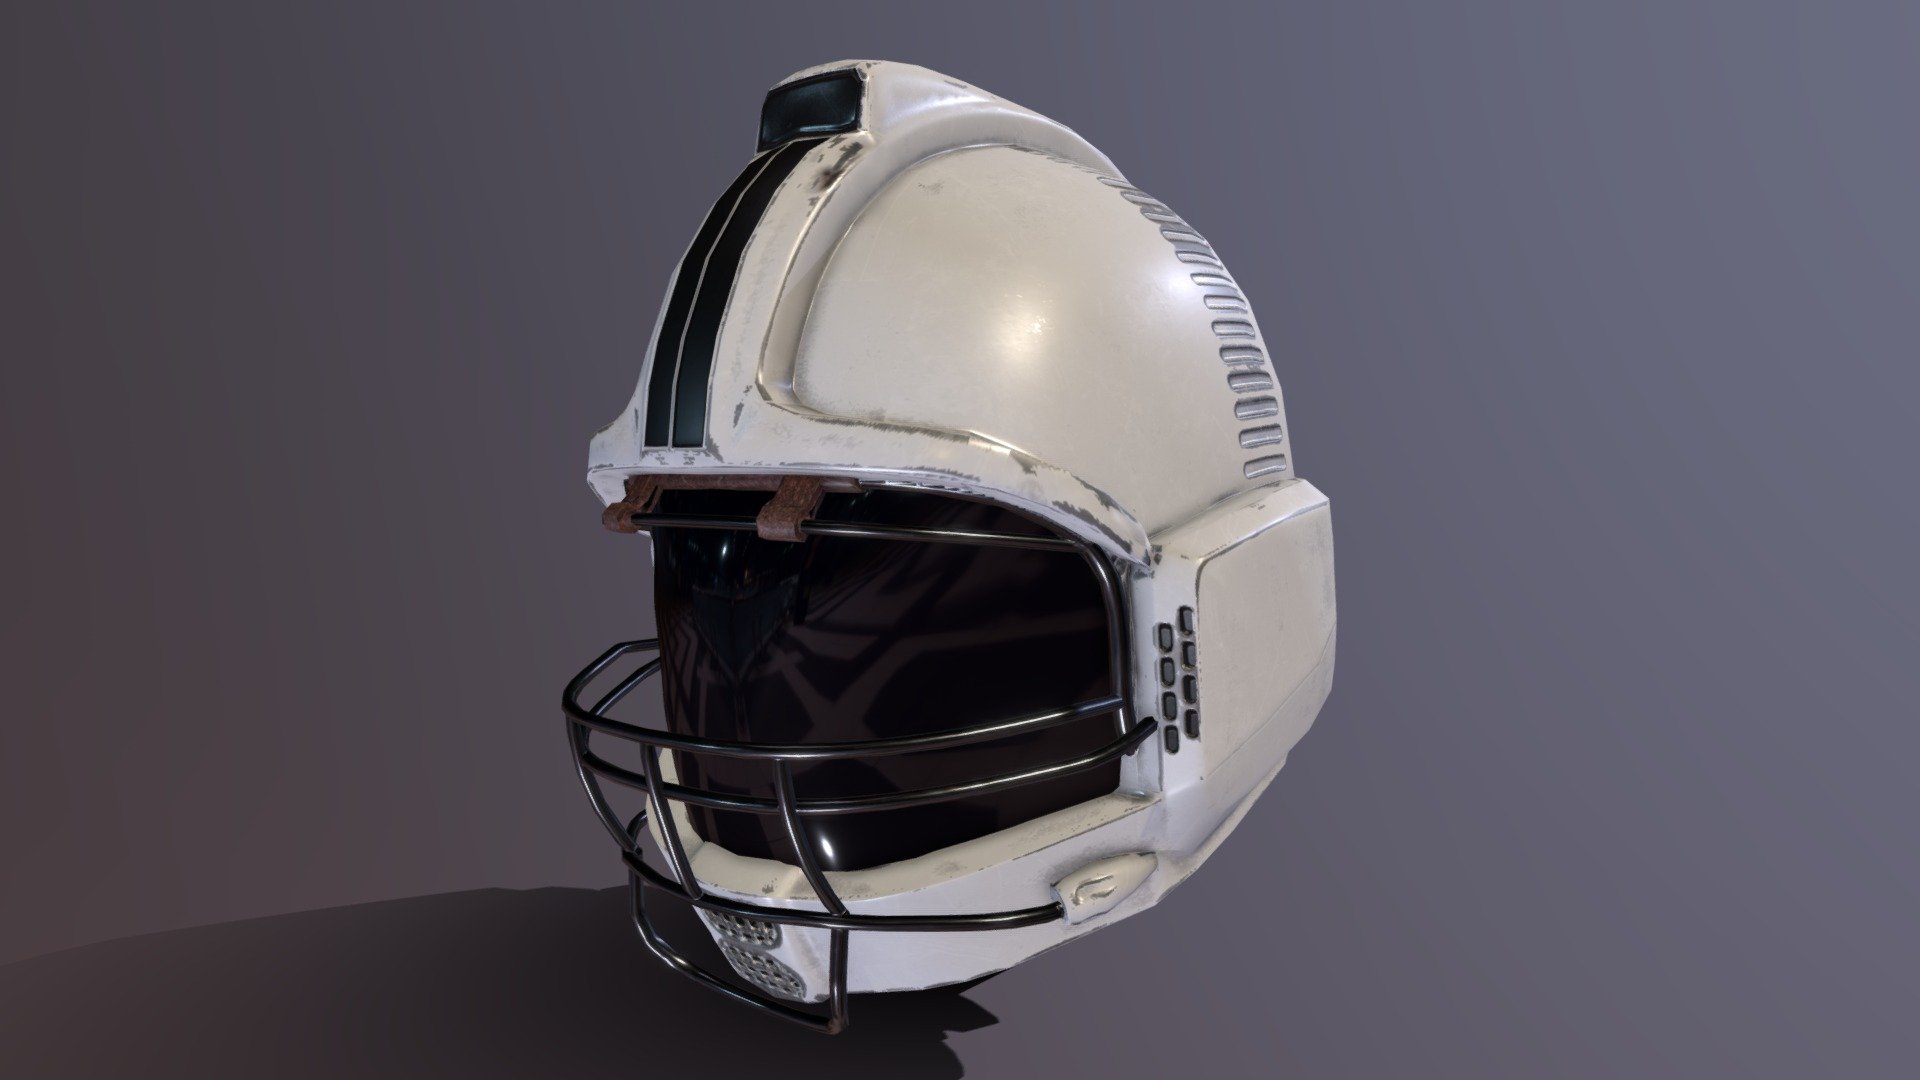 Unfortunate Space Ball Helmet